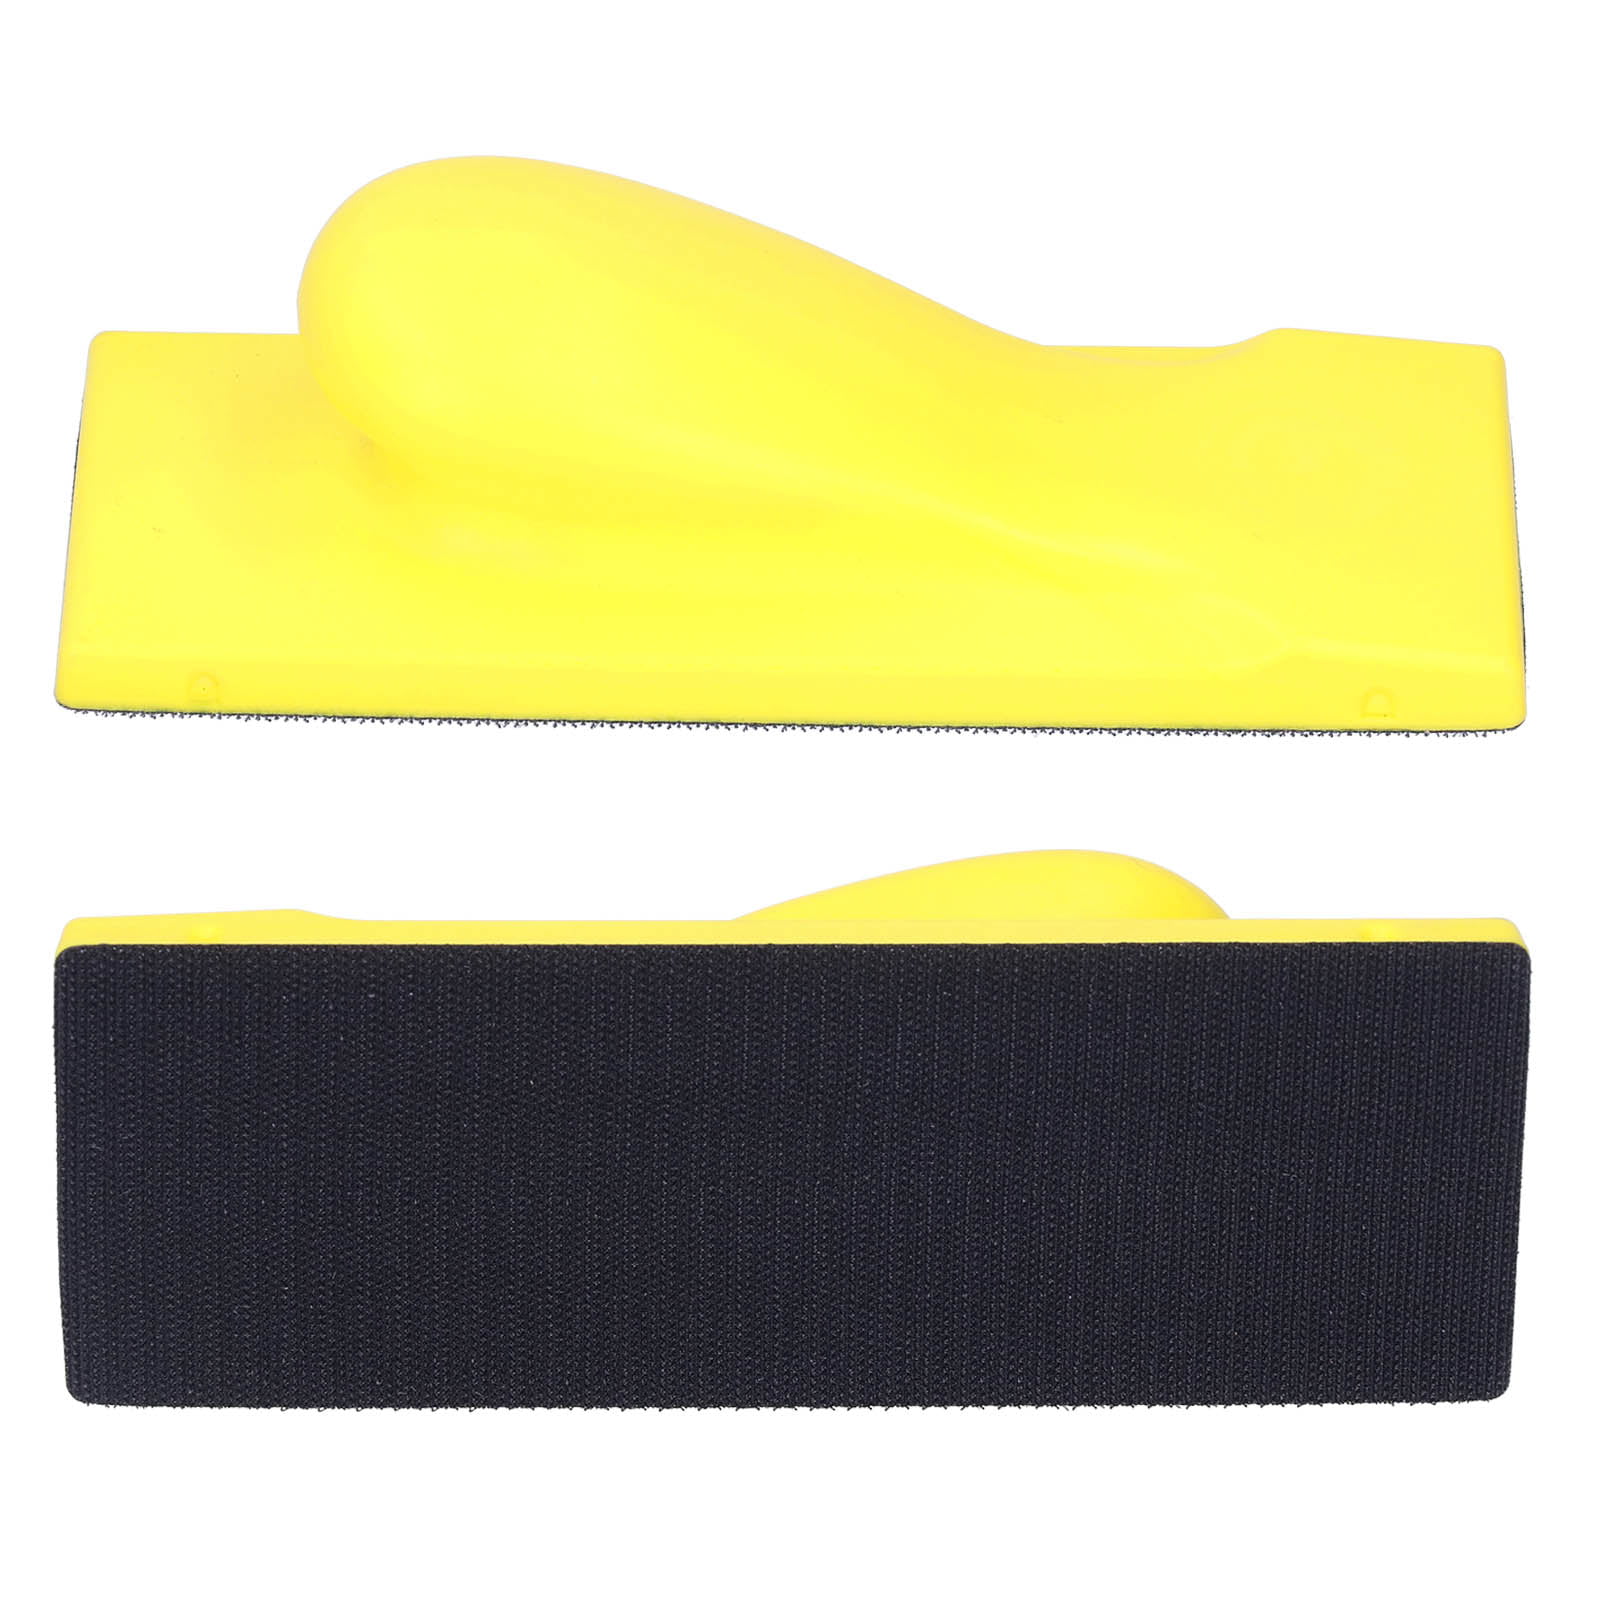 Details about   Hand Sanding Block Rectangular SelfAdhesive Sandpaper Pad Polishing Tool Hot 